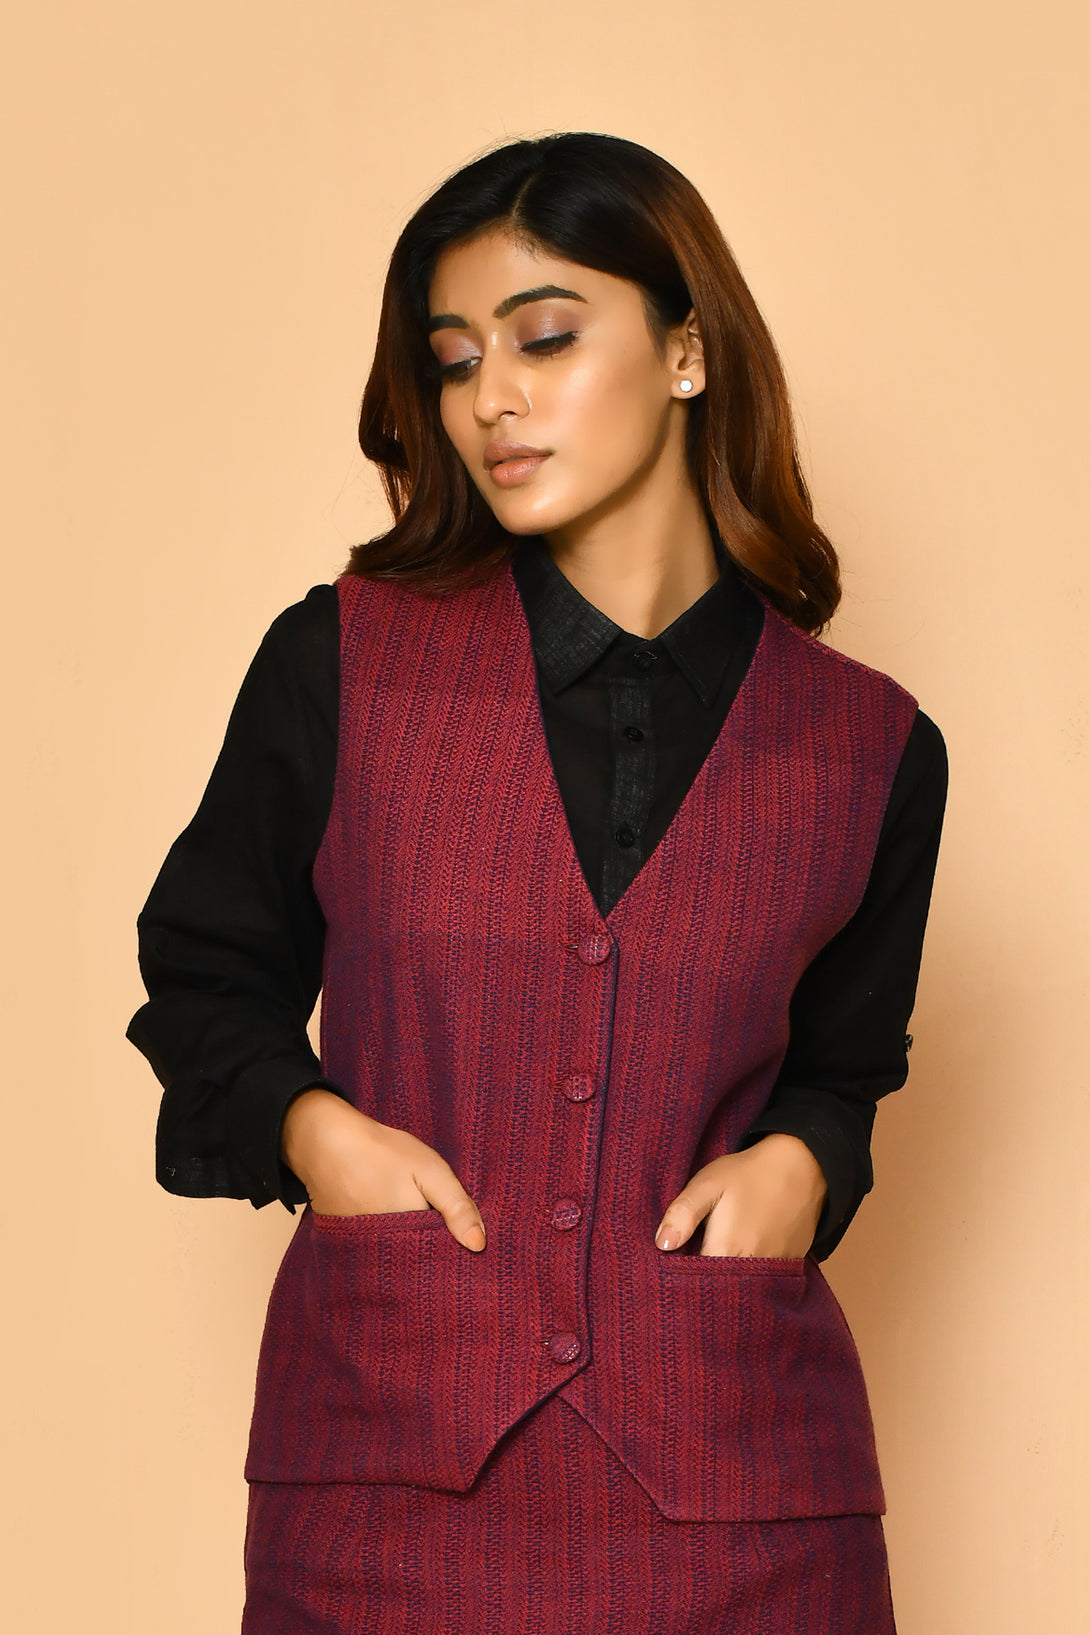 Buy best ladies handloom cotton waist length V-neck jacket for office wear